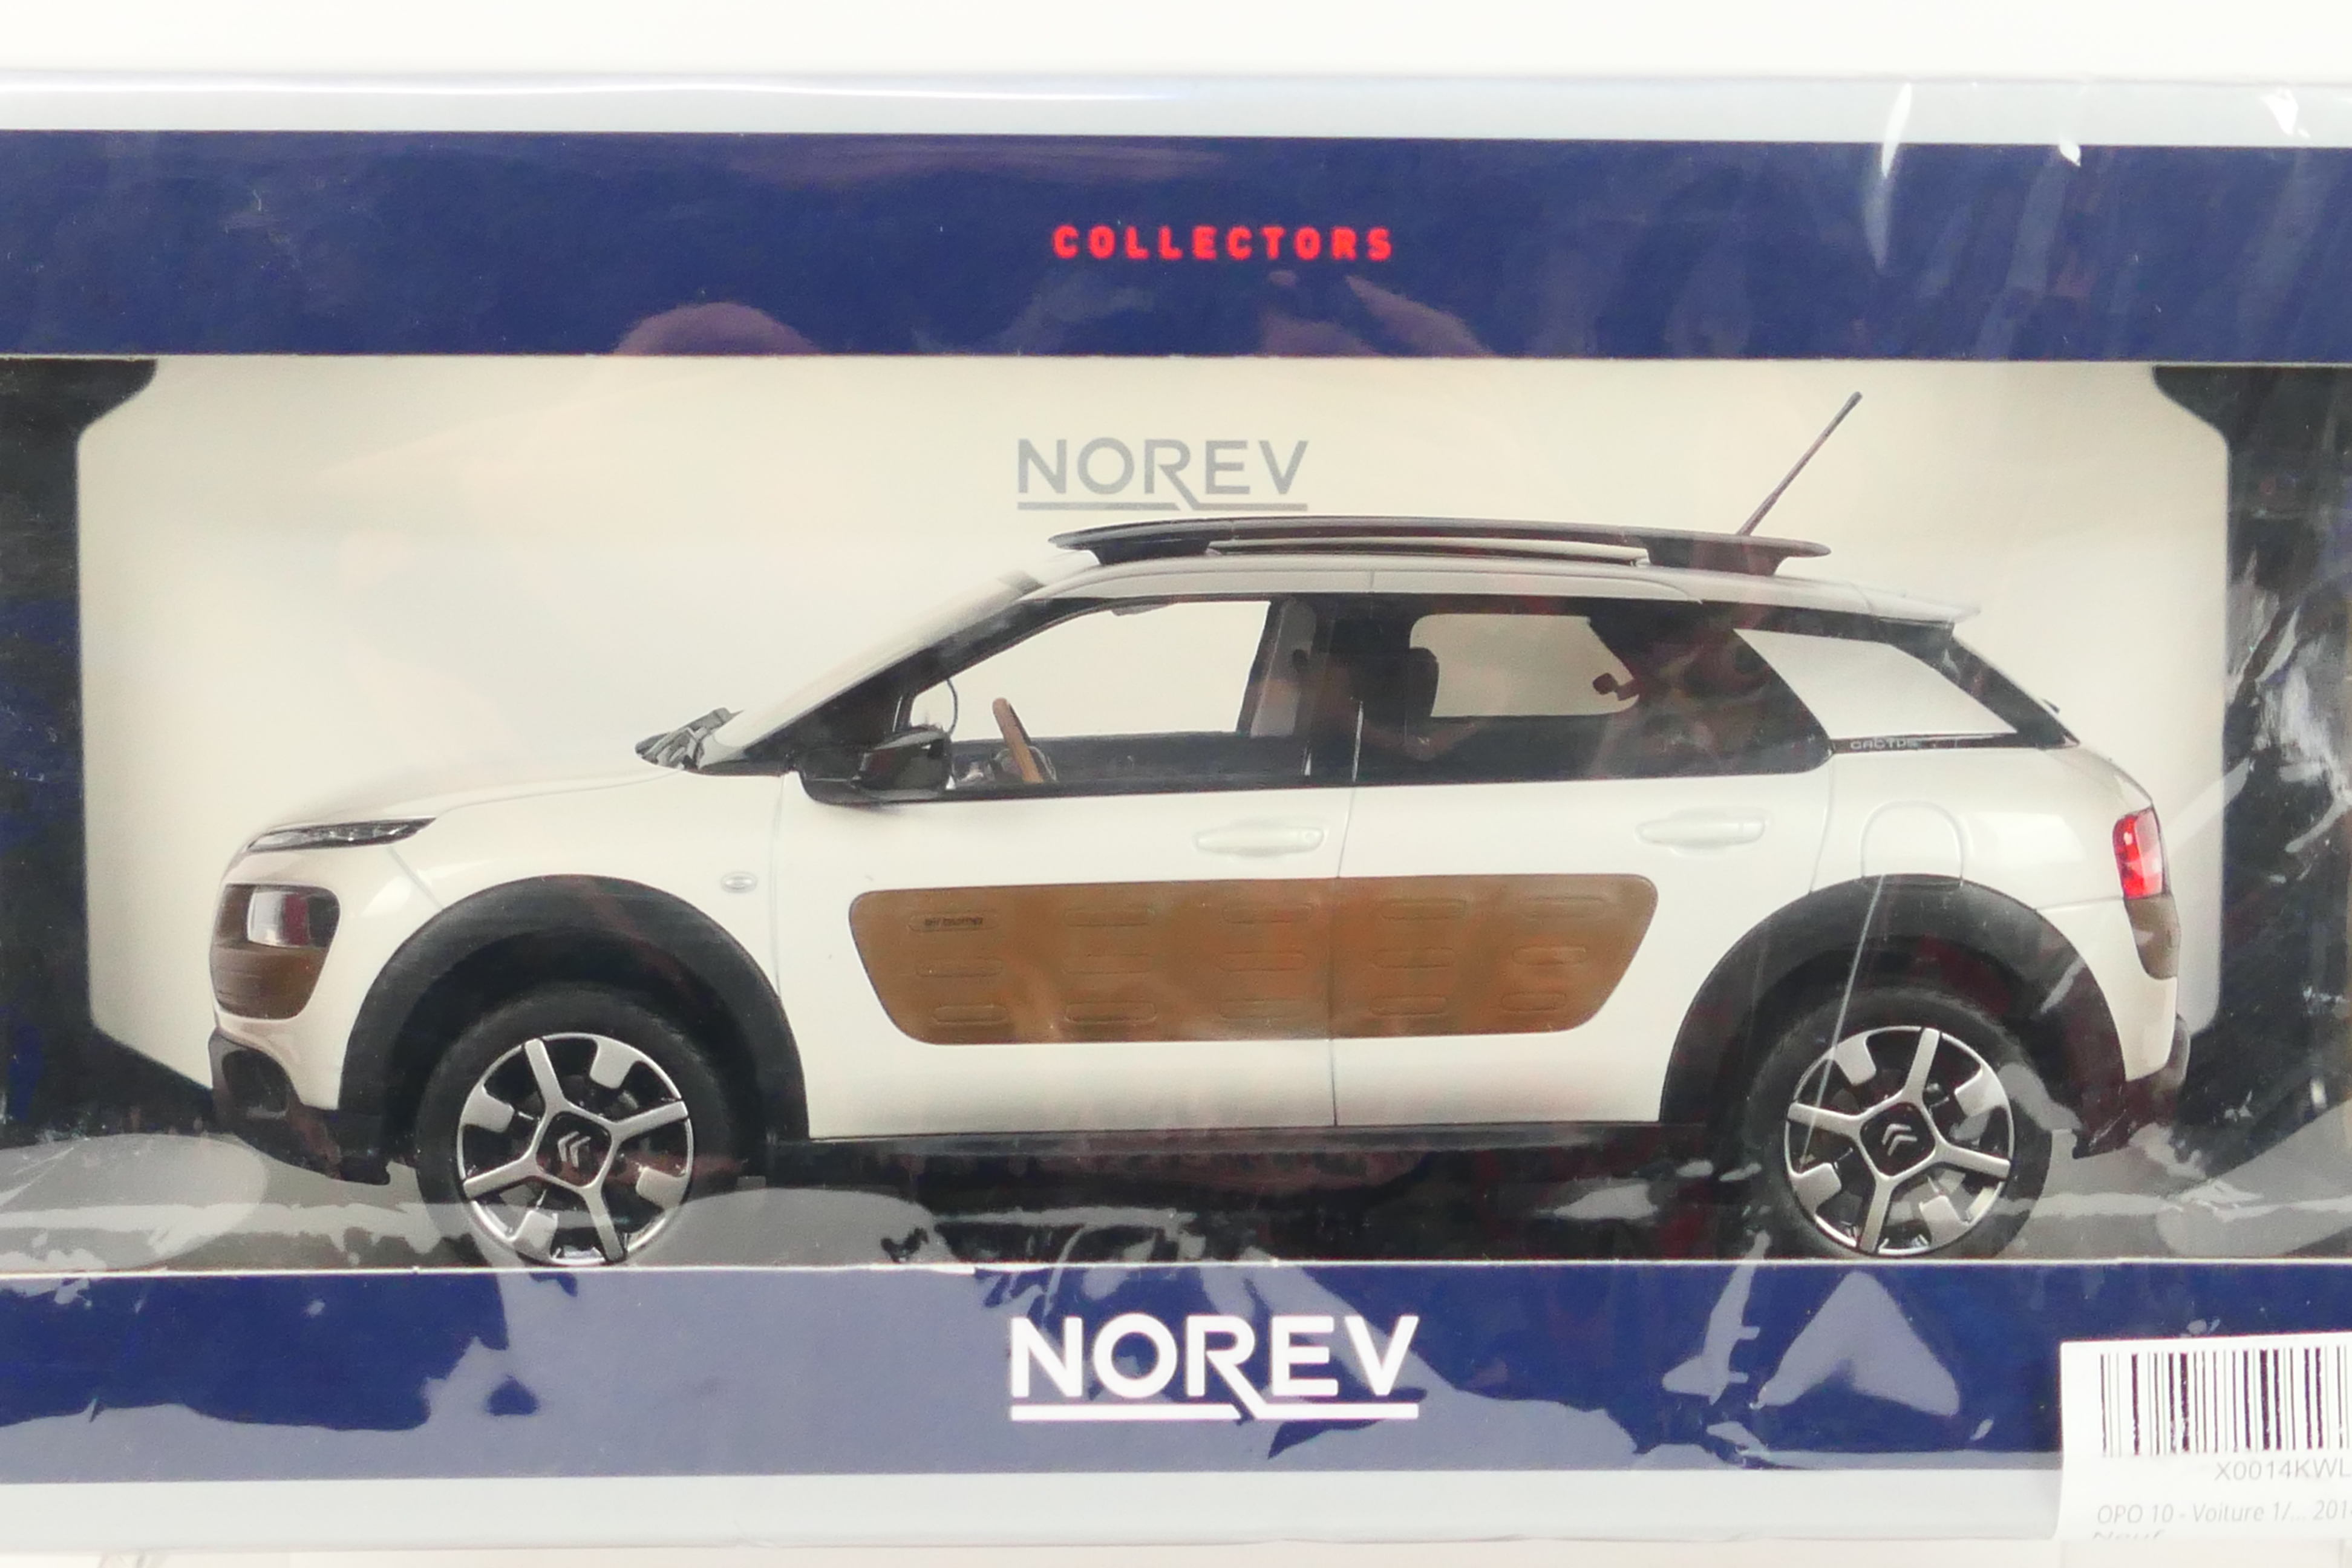 Norev - A boxed 1:18 scale Norev #181651 Citroen C4 Cactus 2014. - Image 2 of 4